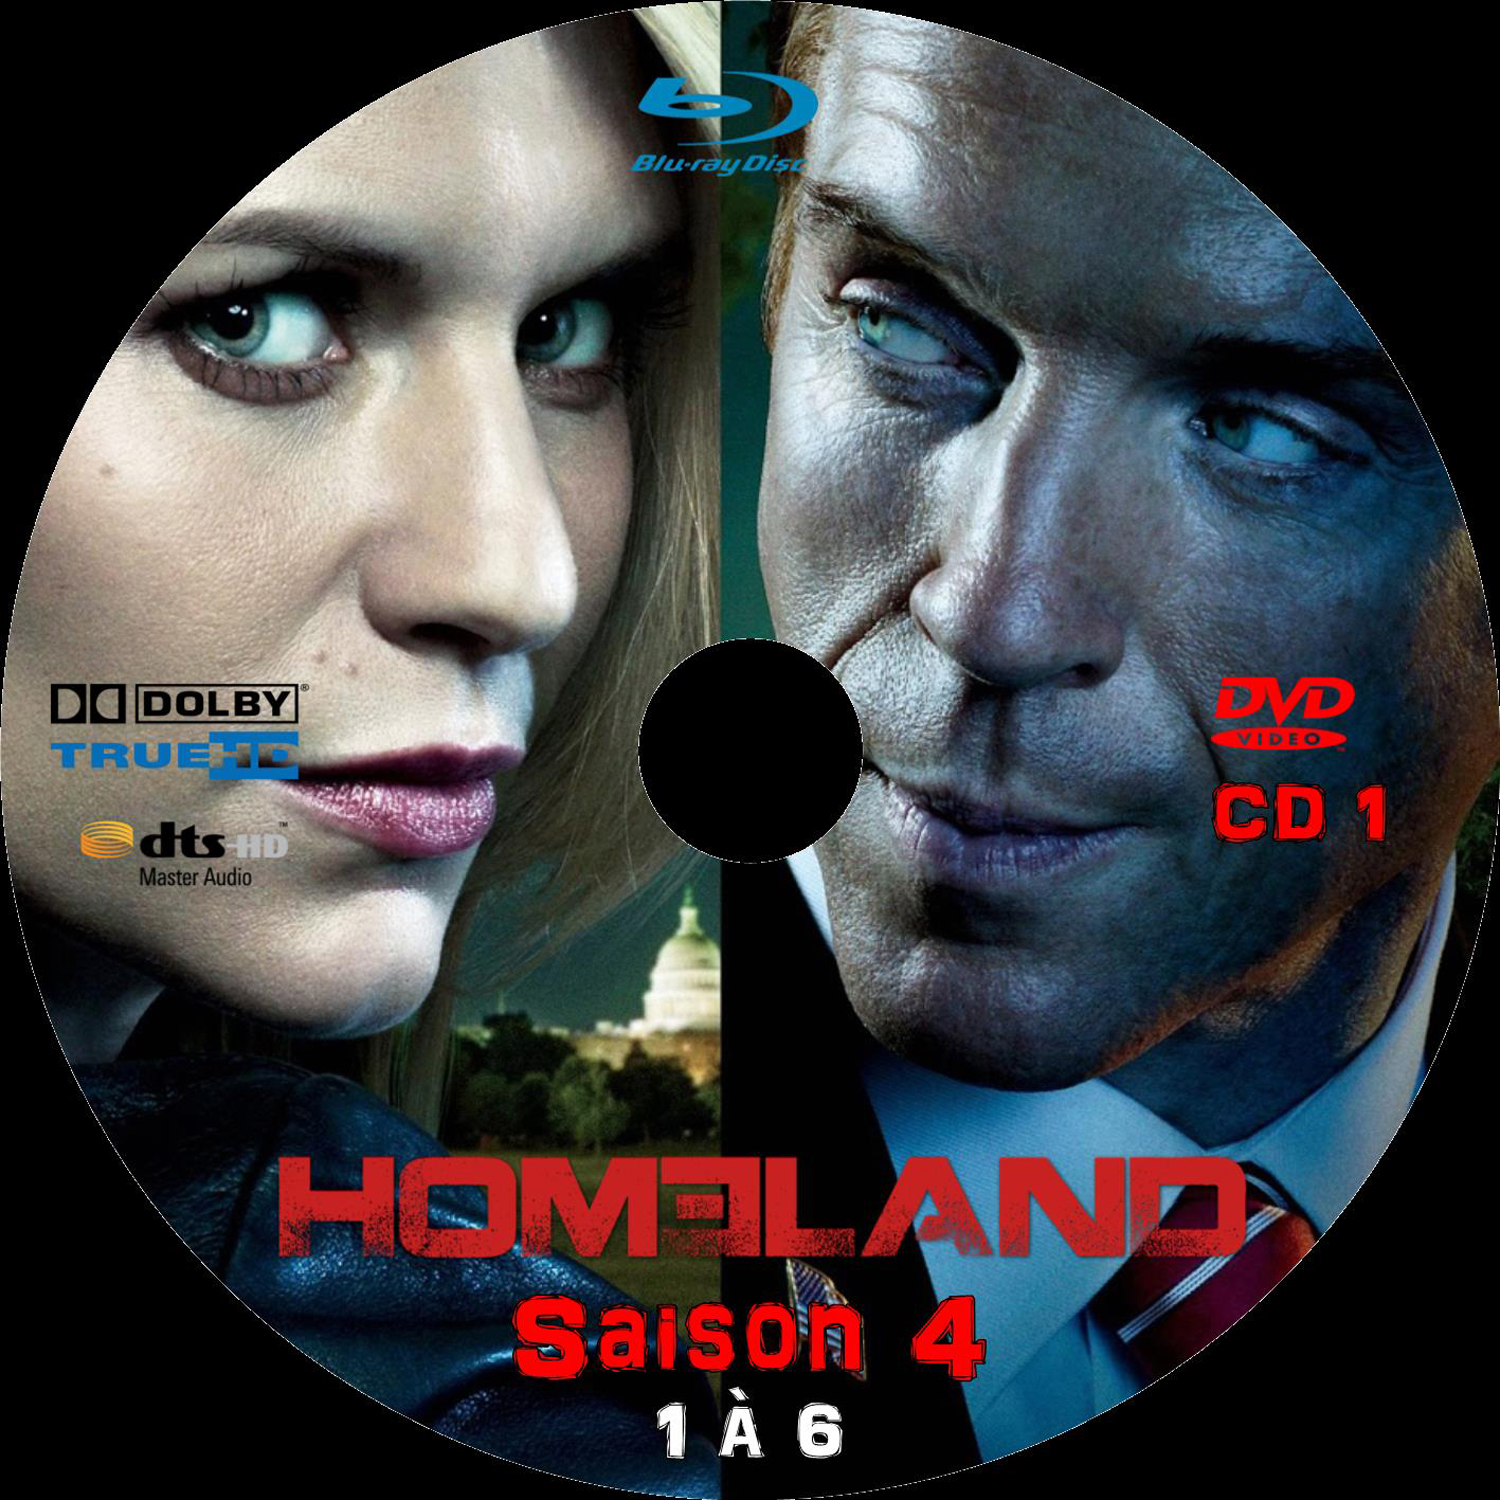 Homeland saison 4 DISC 1 custom